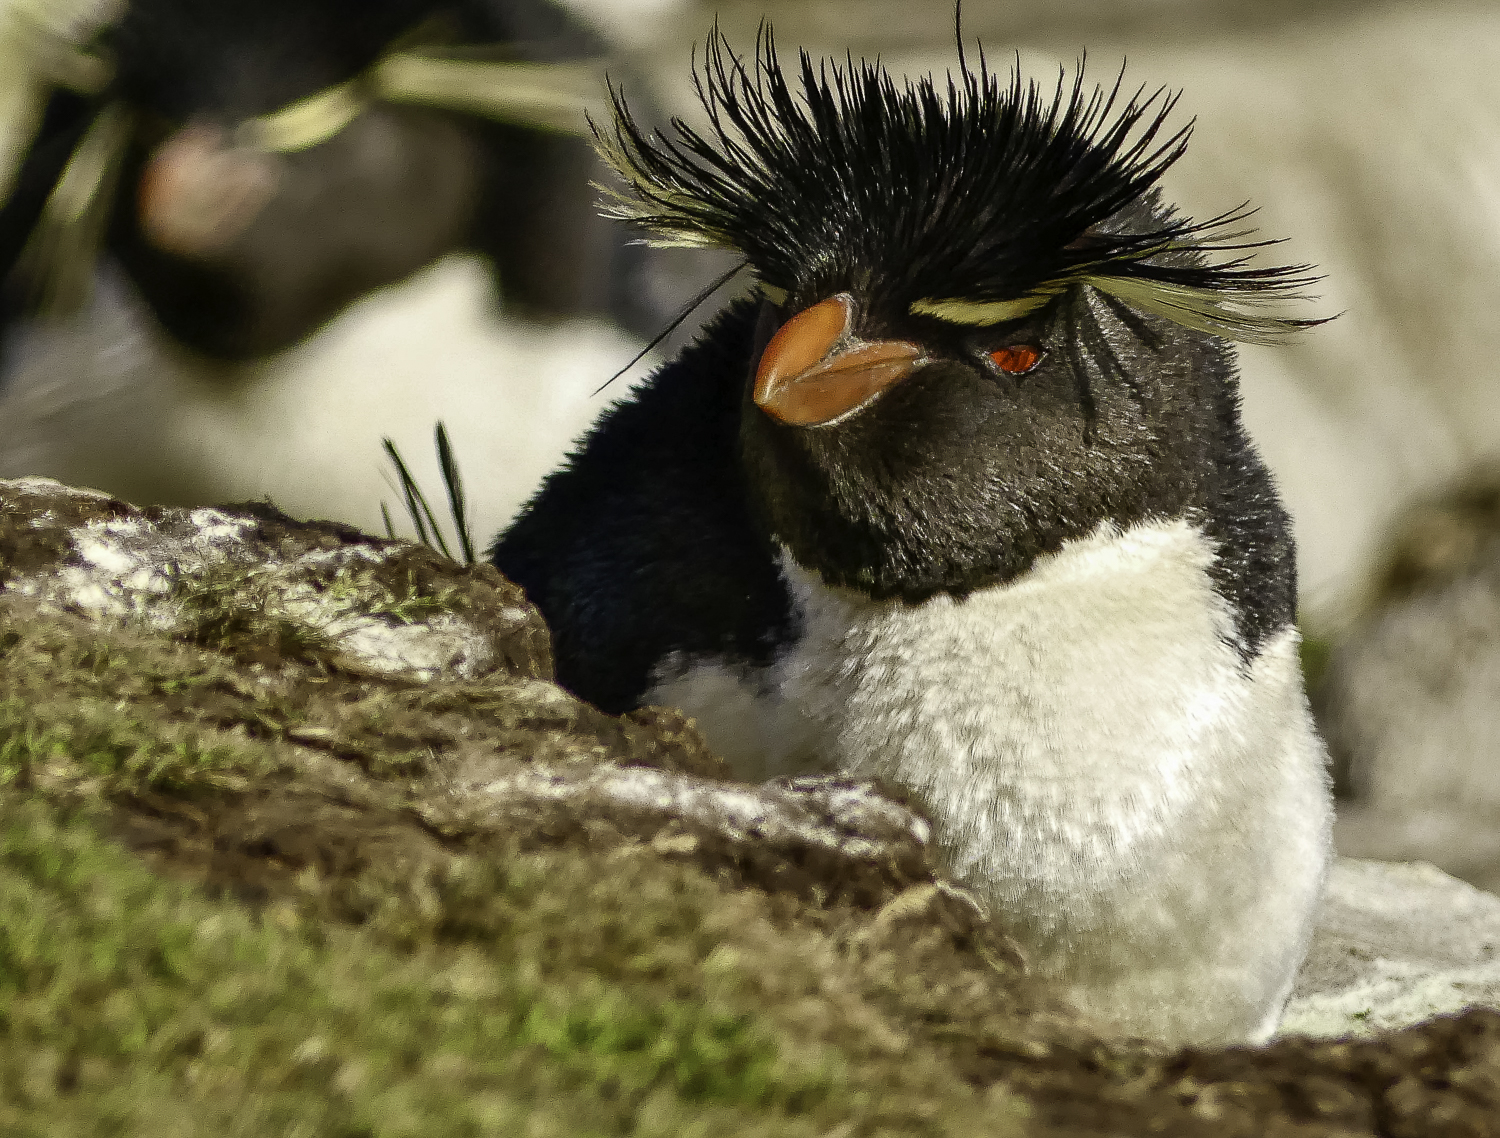 ePostcard #83: Penguins & Countershading (Falklands/Malvinas)